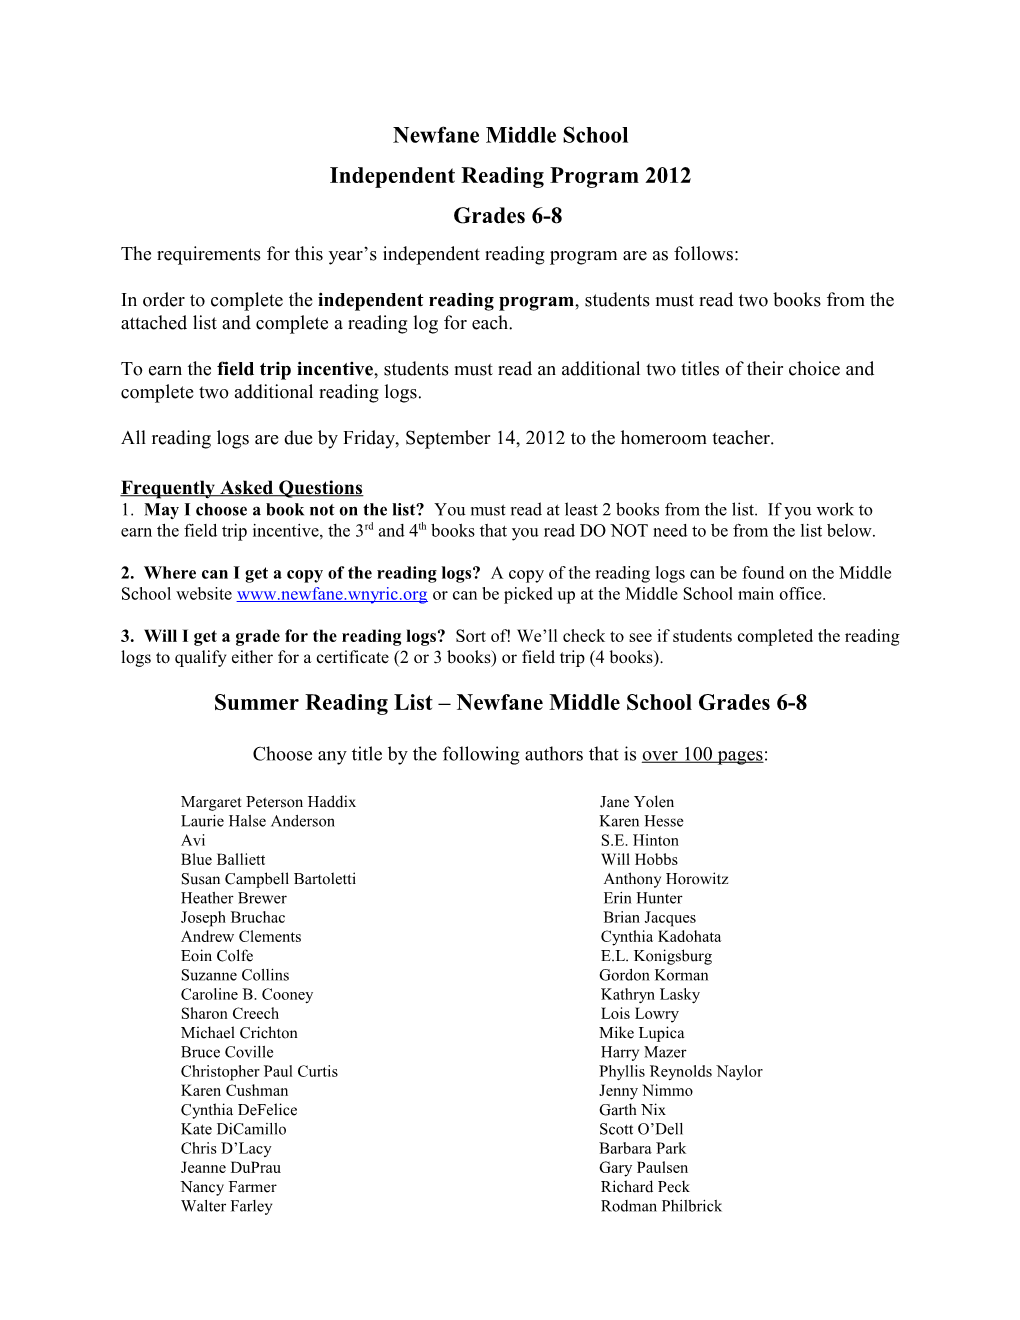 Independent Reading Program 2012